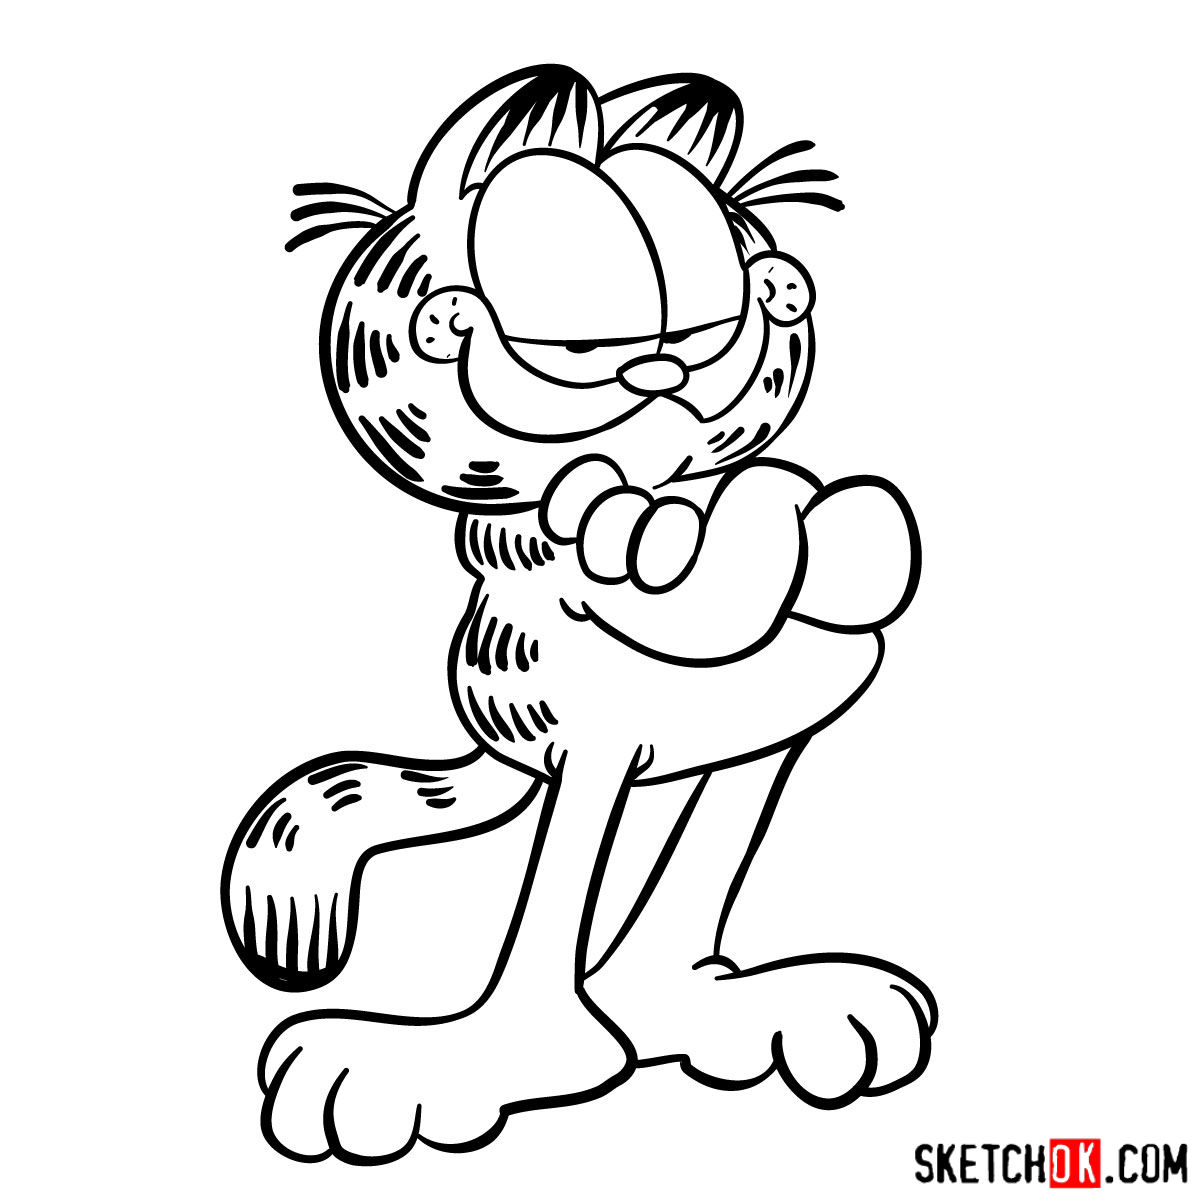 How to draw Garfield - step 11